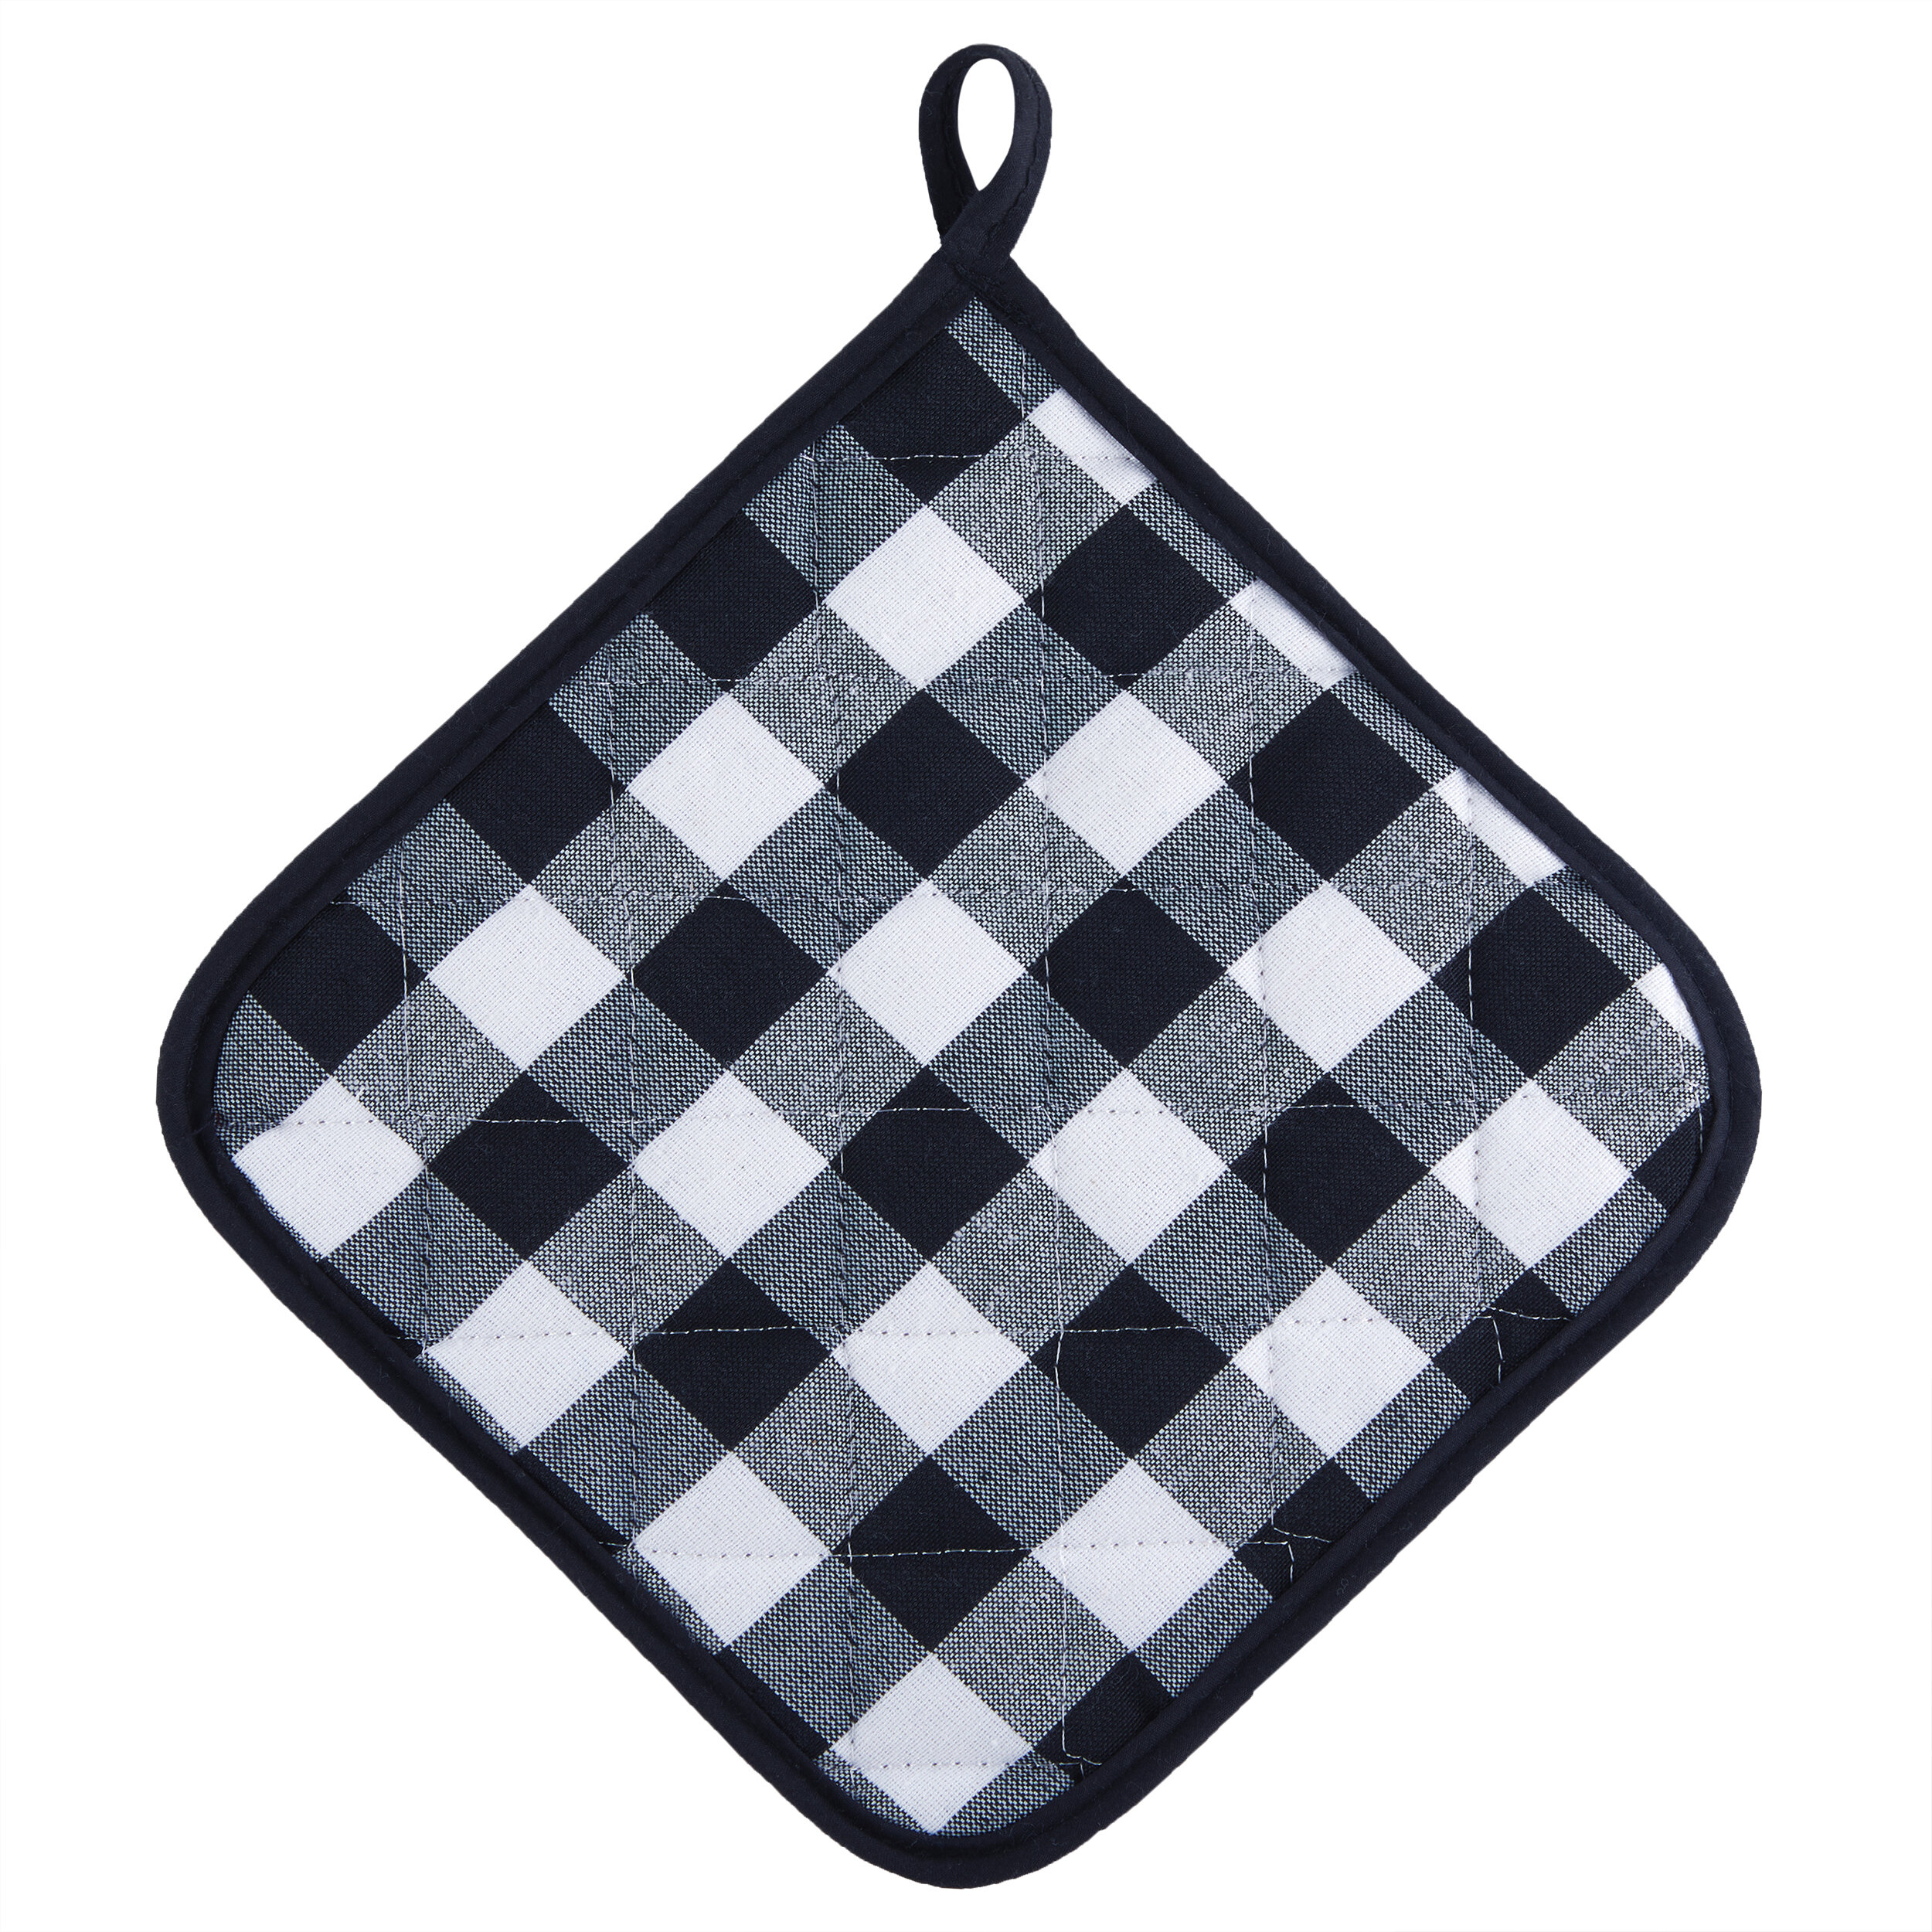 Black and white checkered  Pot holder hot pad.